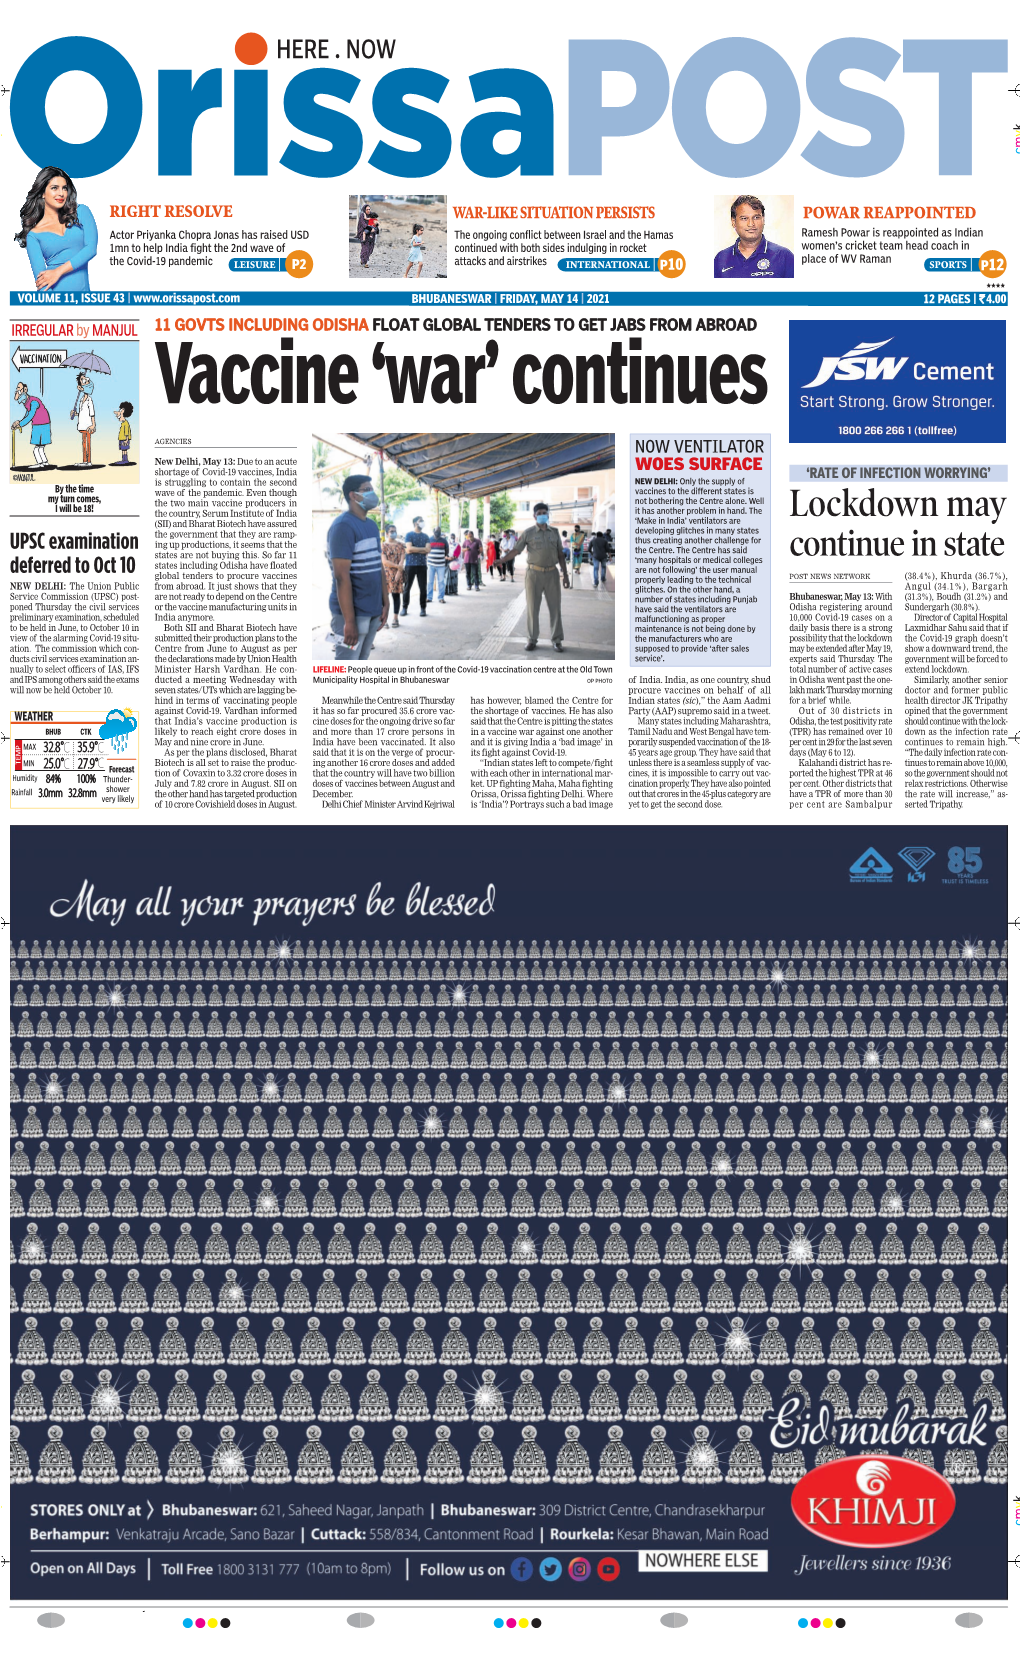 Vaccine ‘War’ Continues